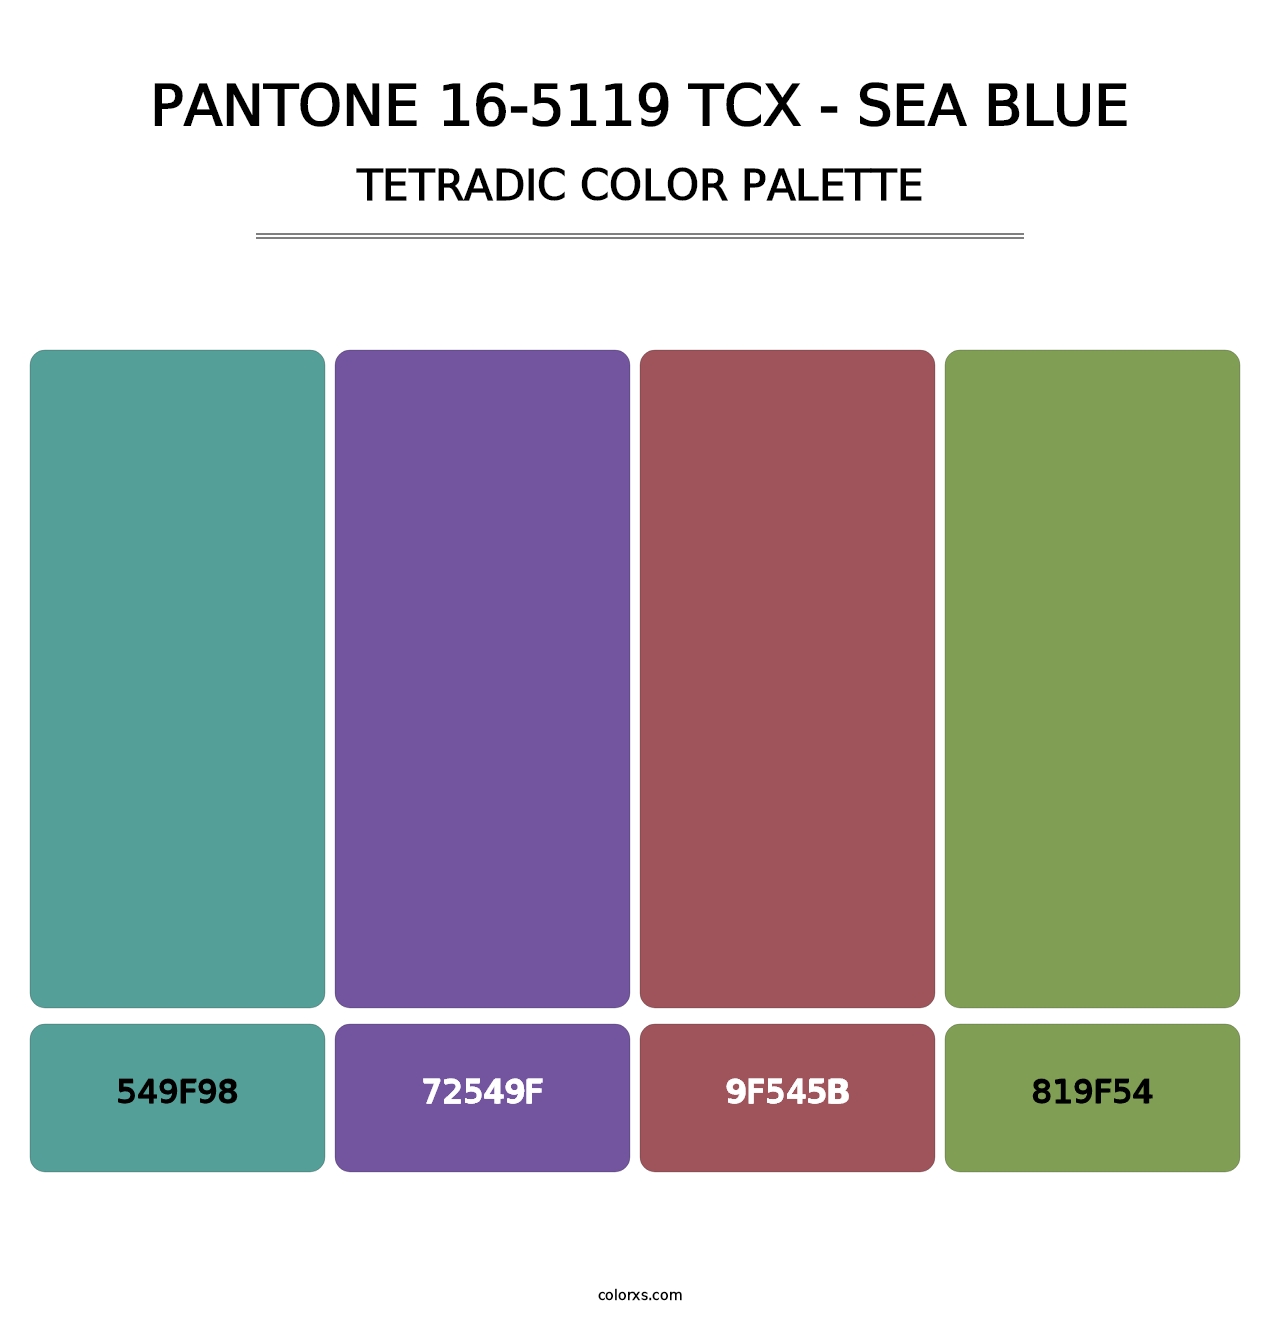 PANTONE 16-5119 TCX - Sea Blue - Tetradic Color Palette